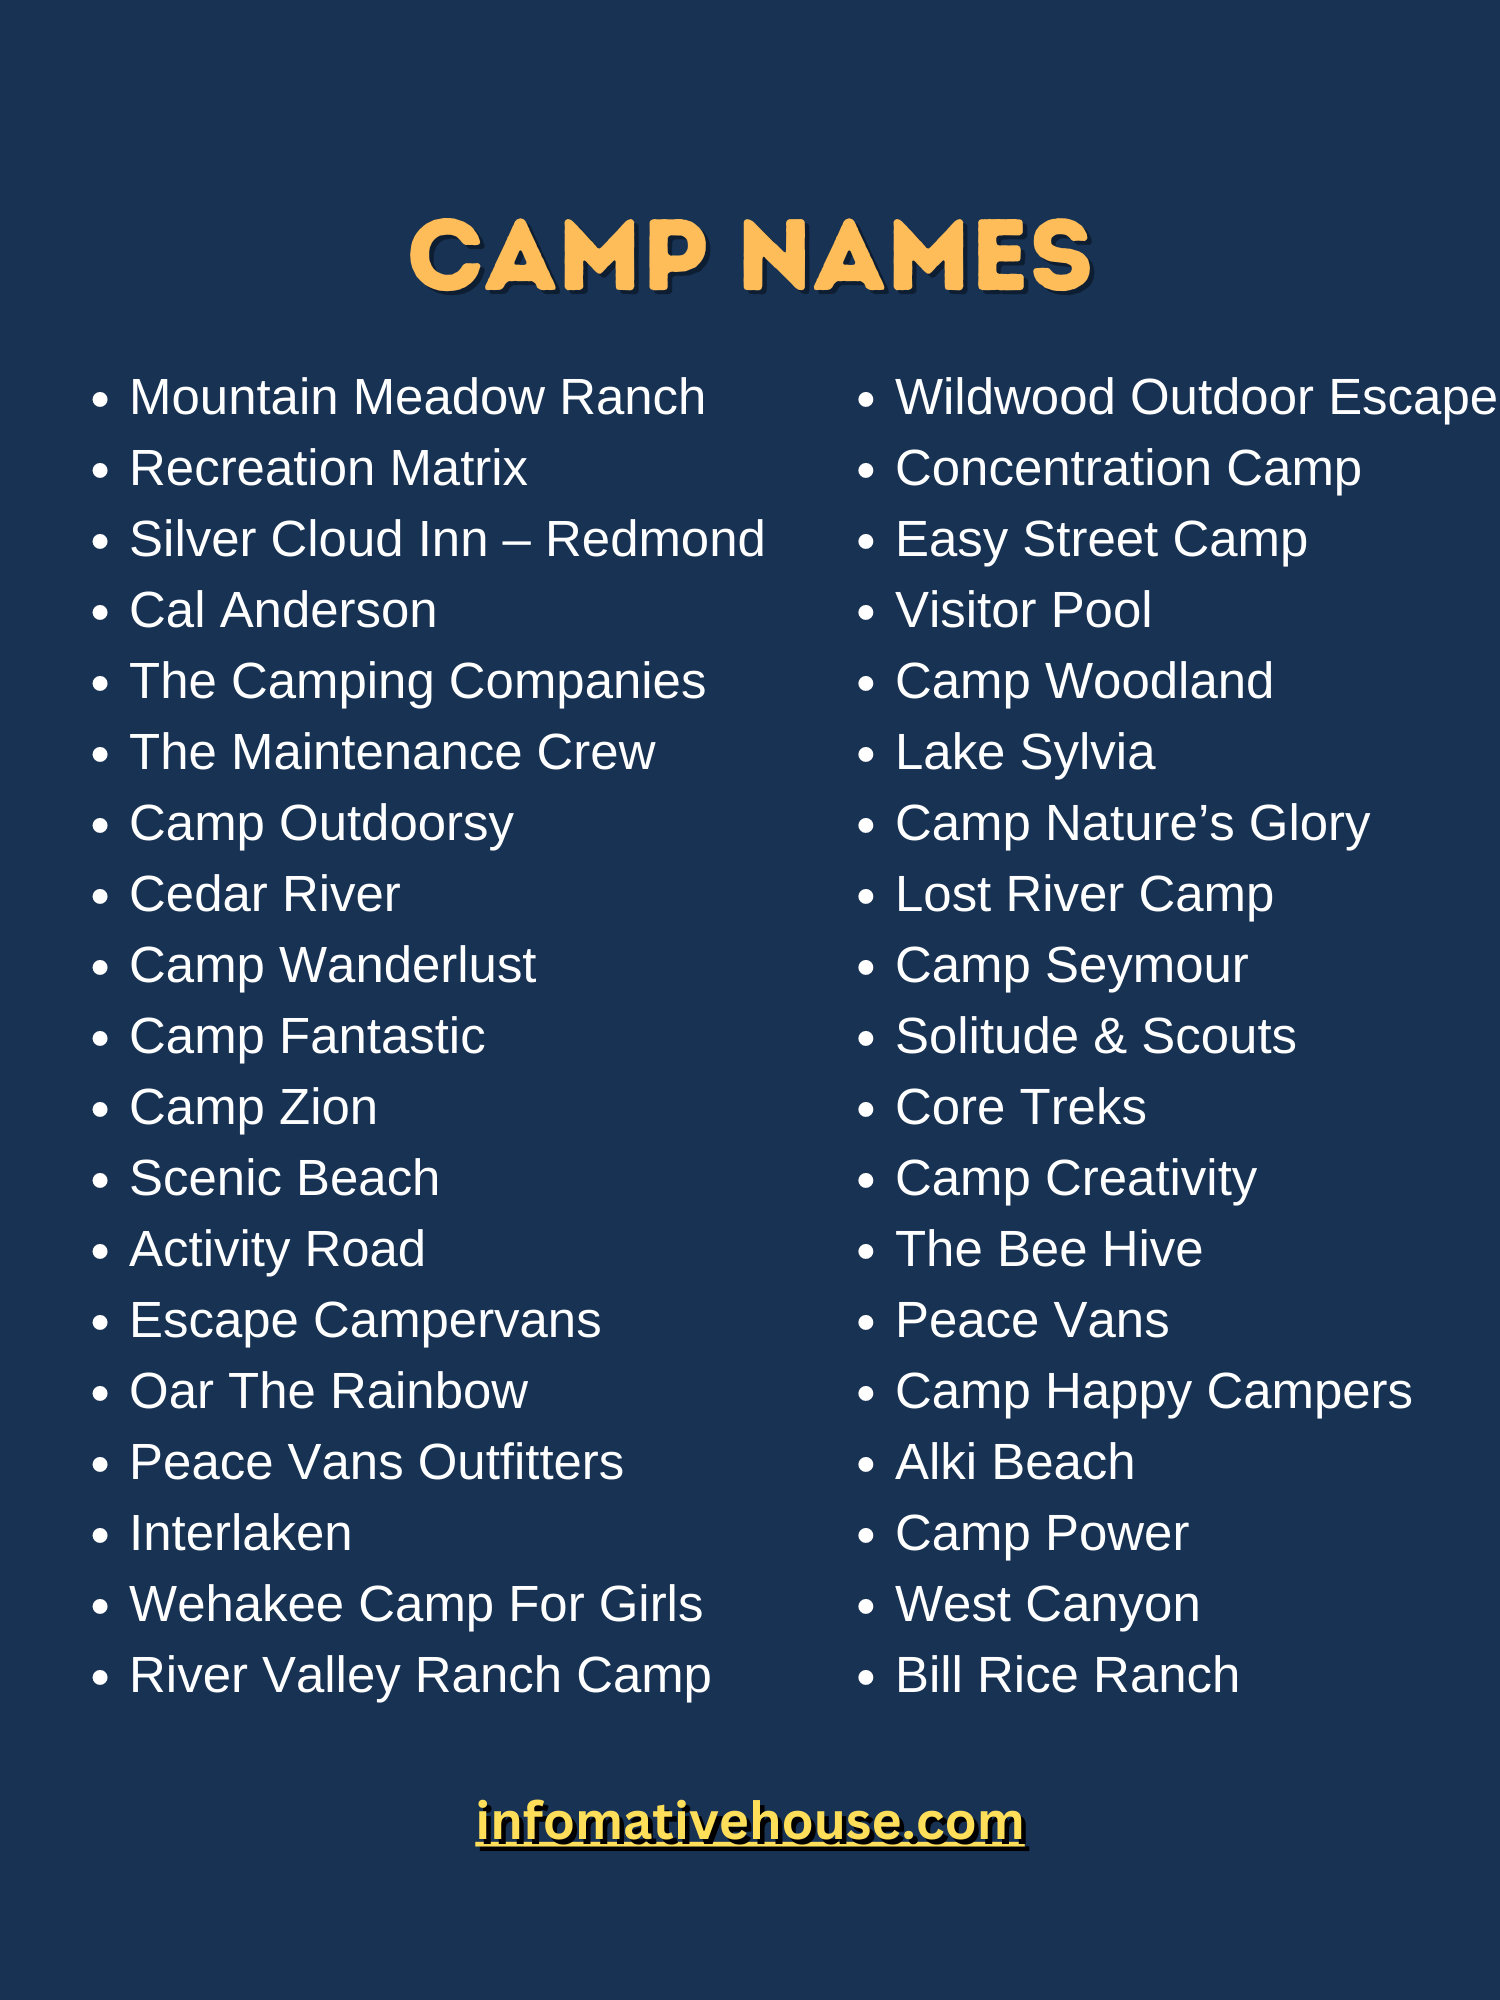 Camp Names Ideas